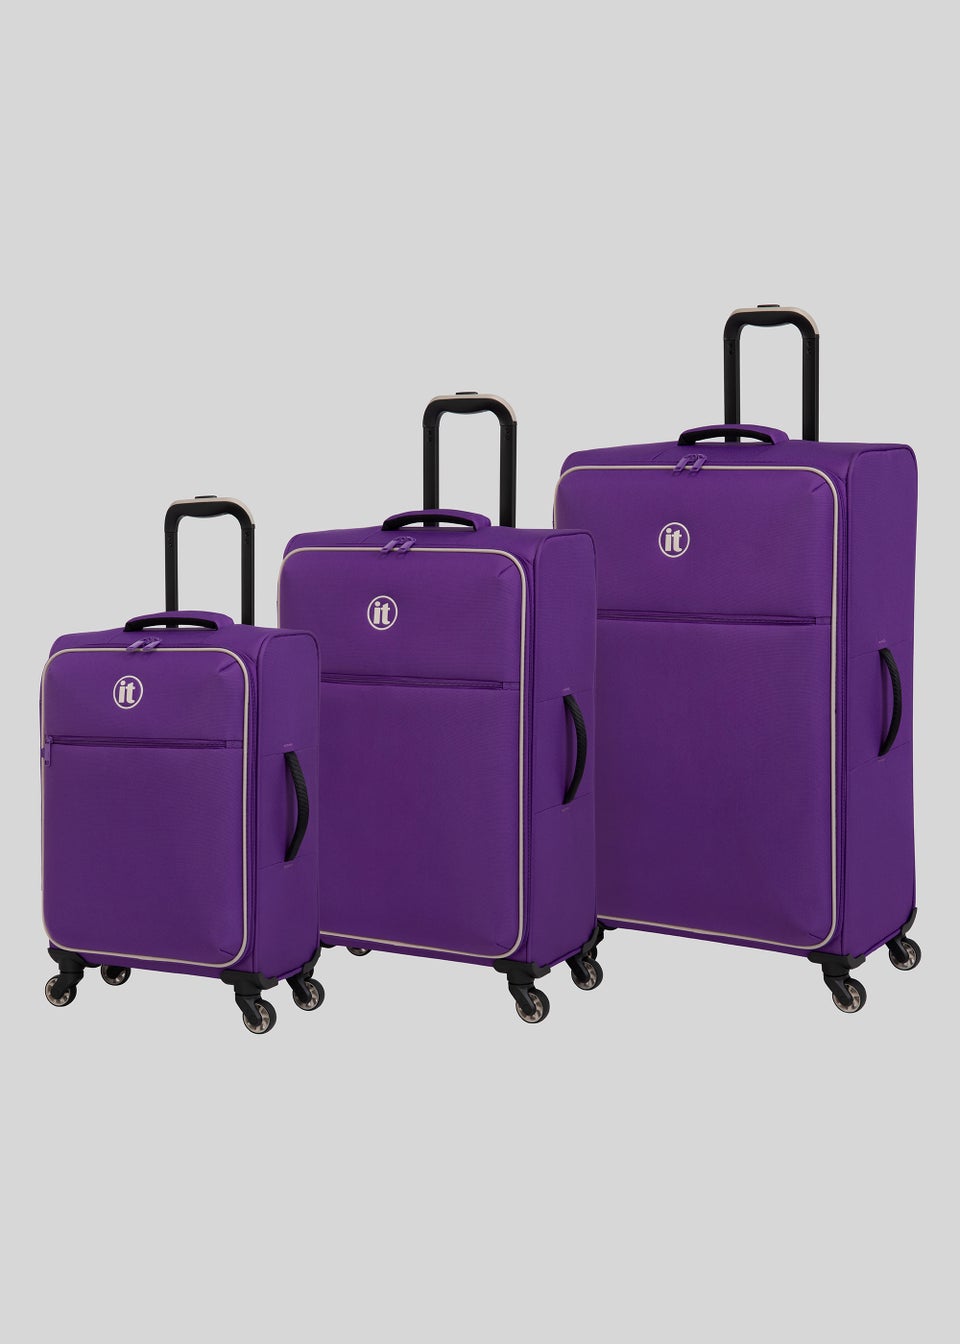 IT Luggage Purple Soft Shell Suitcase